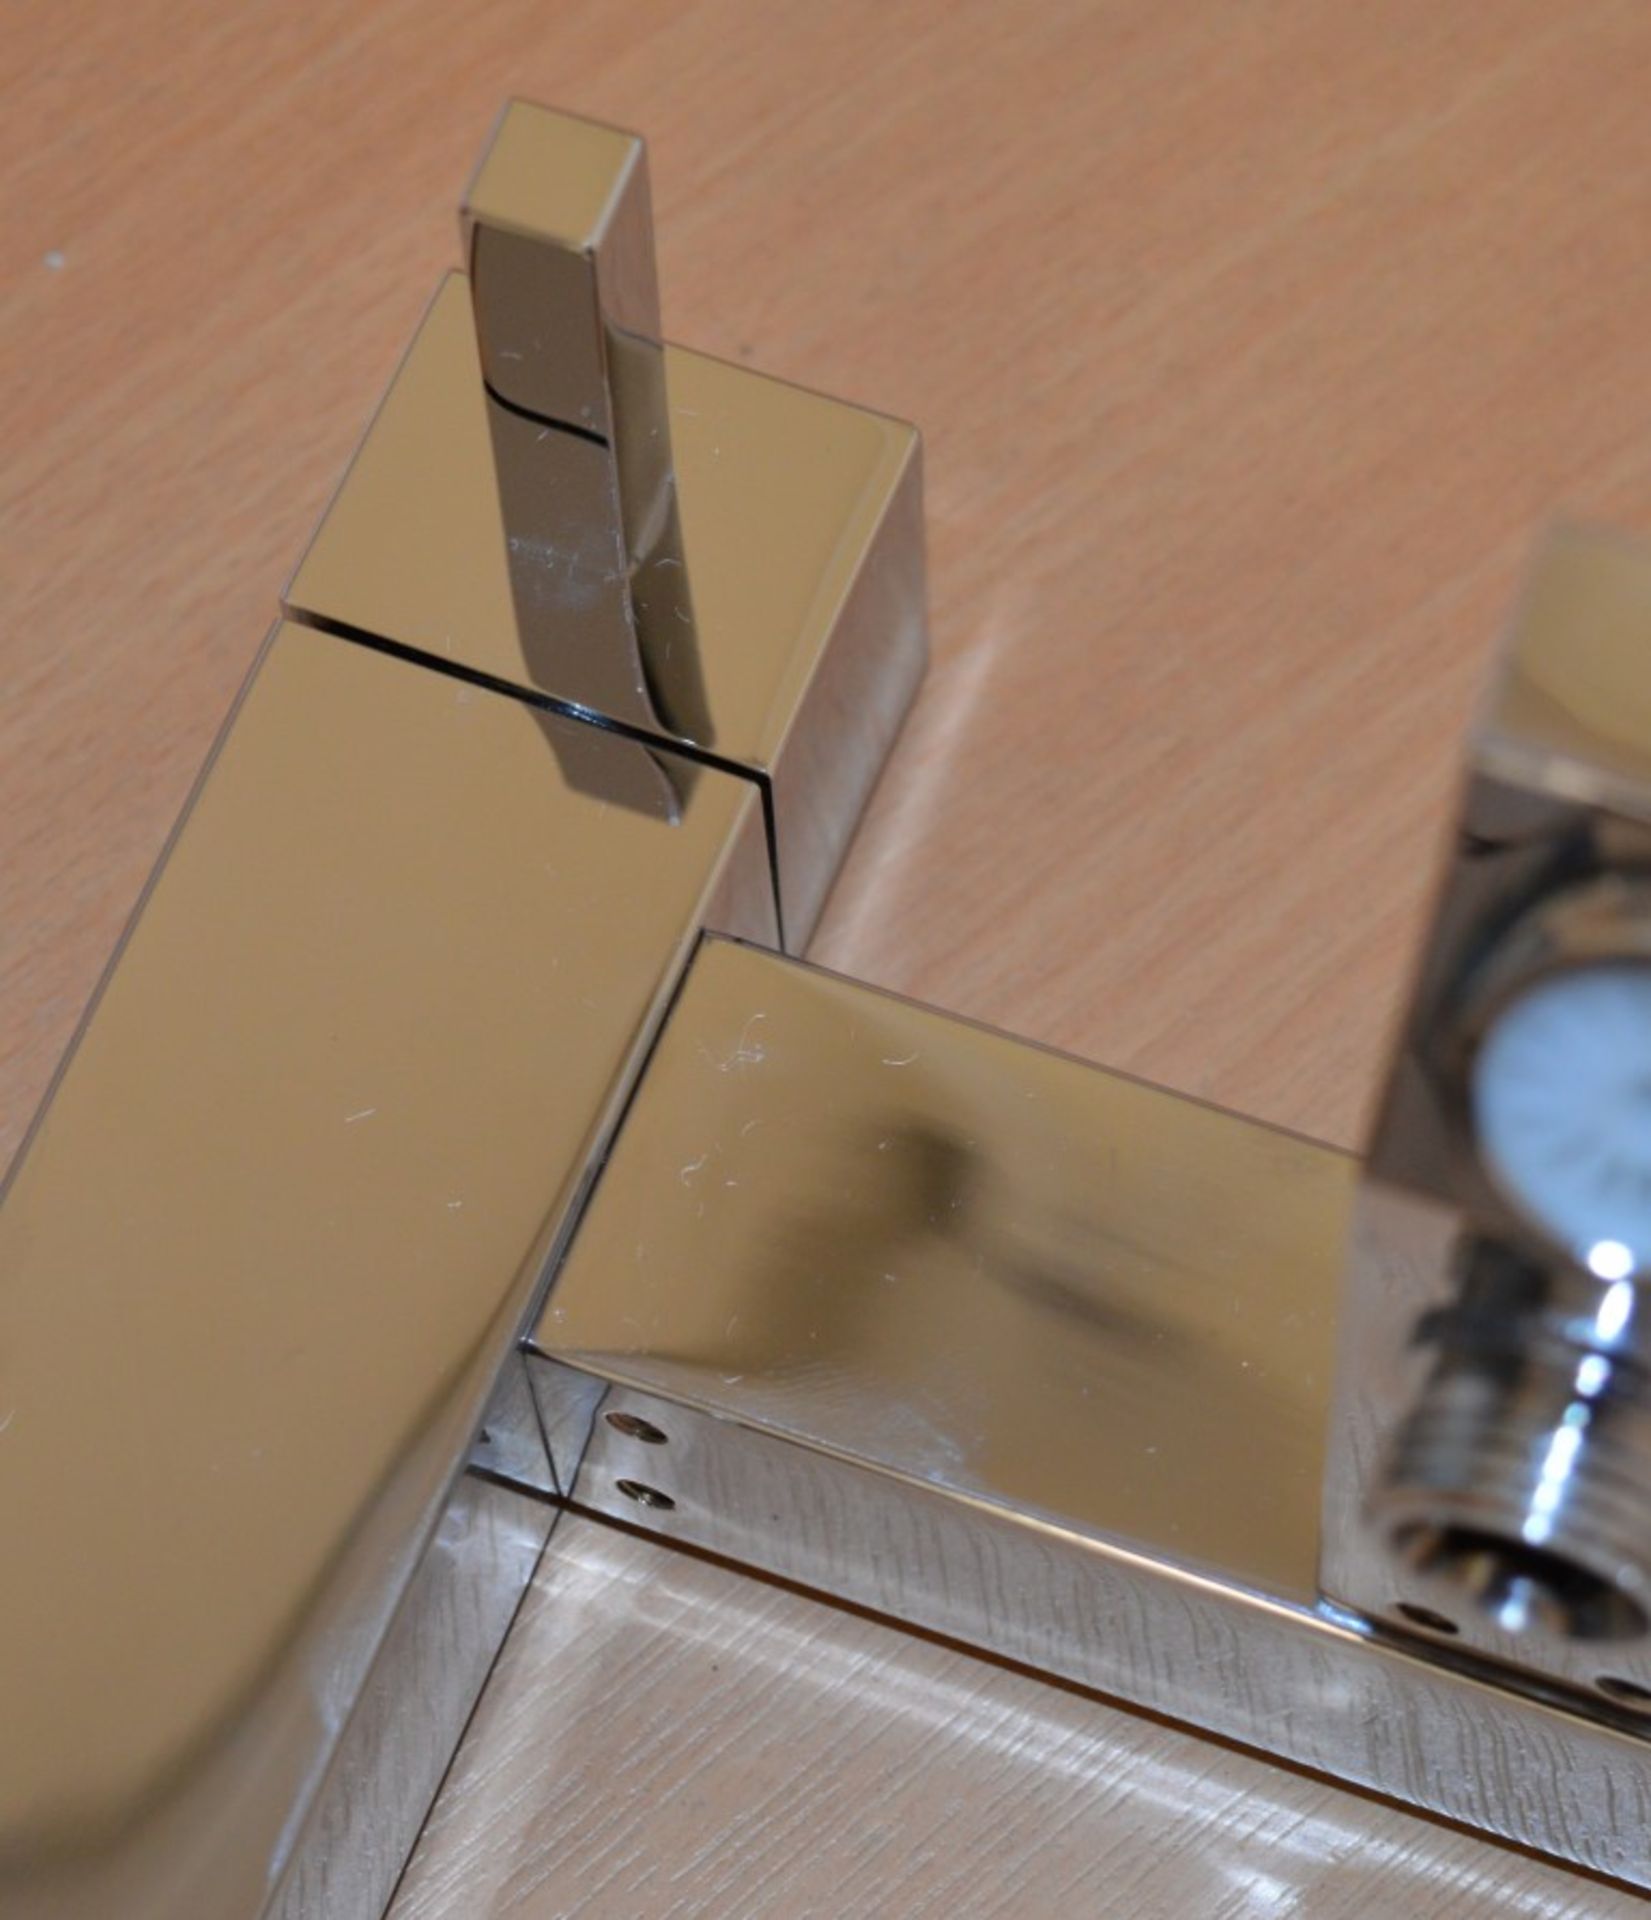 1 x Verona Deck Bath Shower Mixer Tap - Vogue Bathrooms - Modern Bath Mixer Tap in Bright Chrome - Image 9 of 15